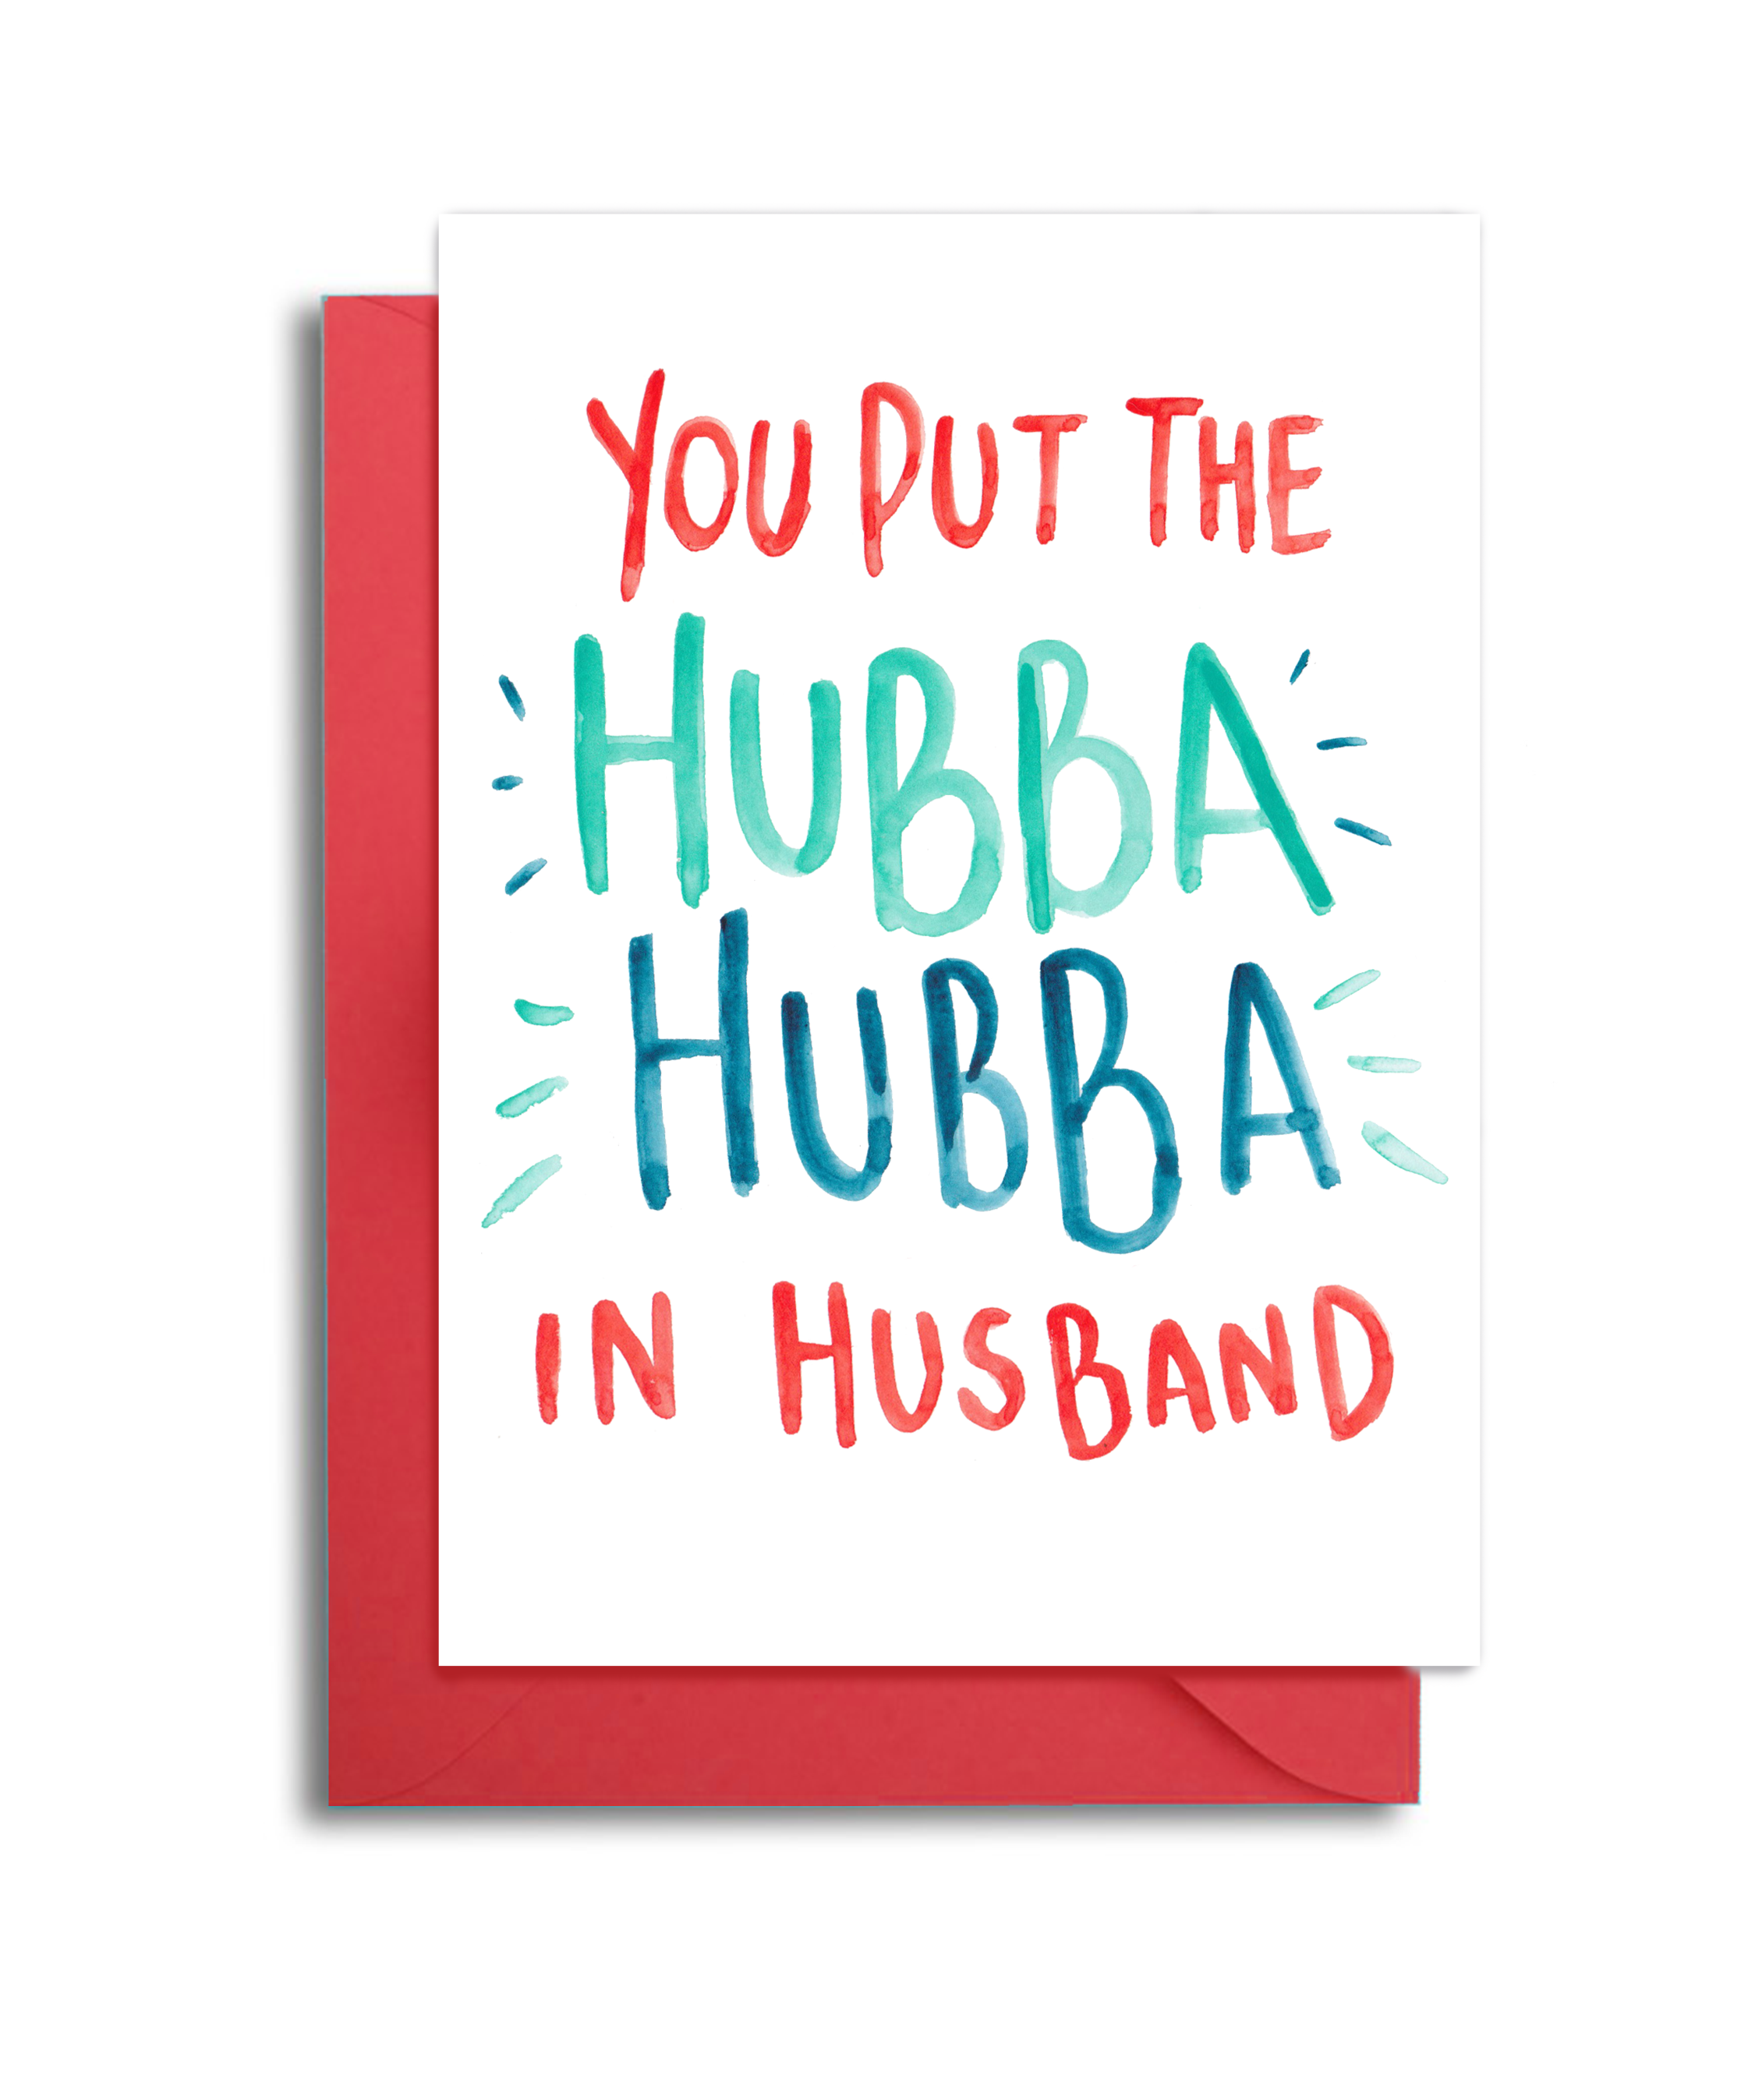 You Put the Hubba Hubba in Husband